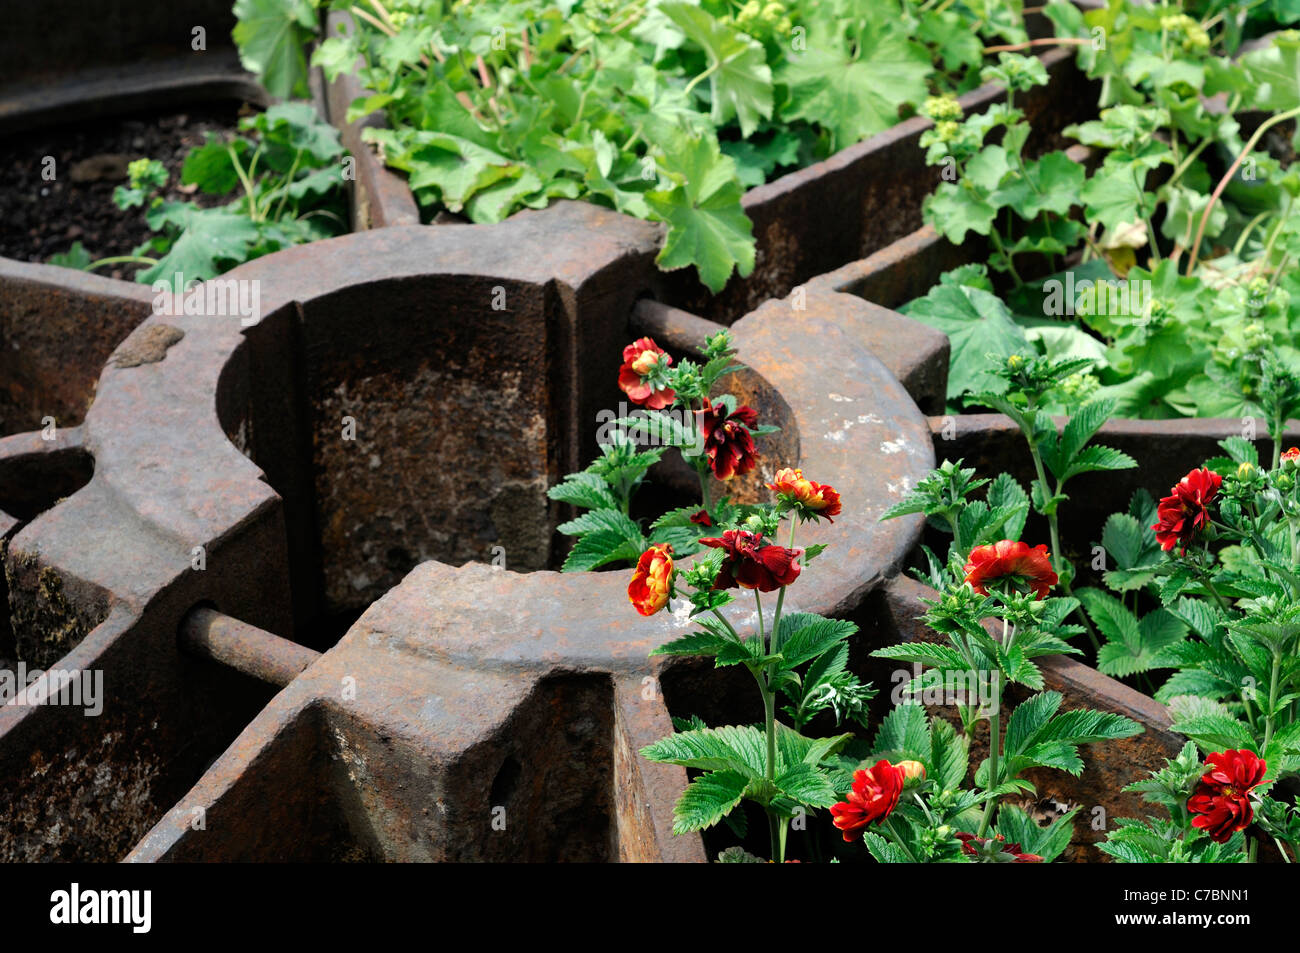 red potentilla perennial flower bloom blossom grow growing in between rusting rusty scrap metal disused garden Stock Photo